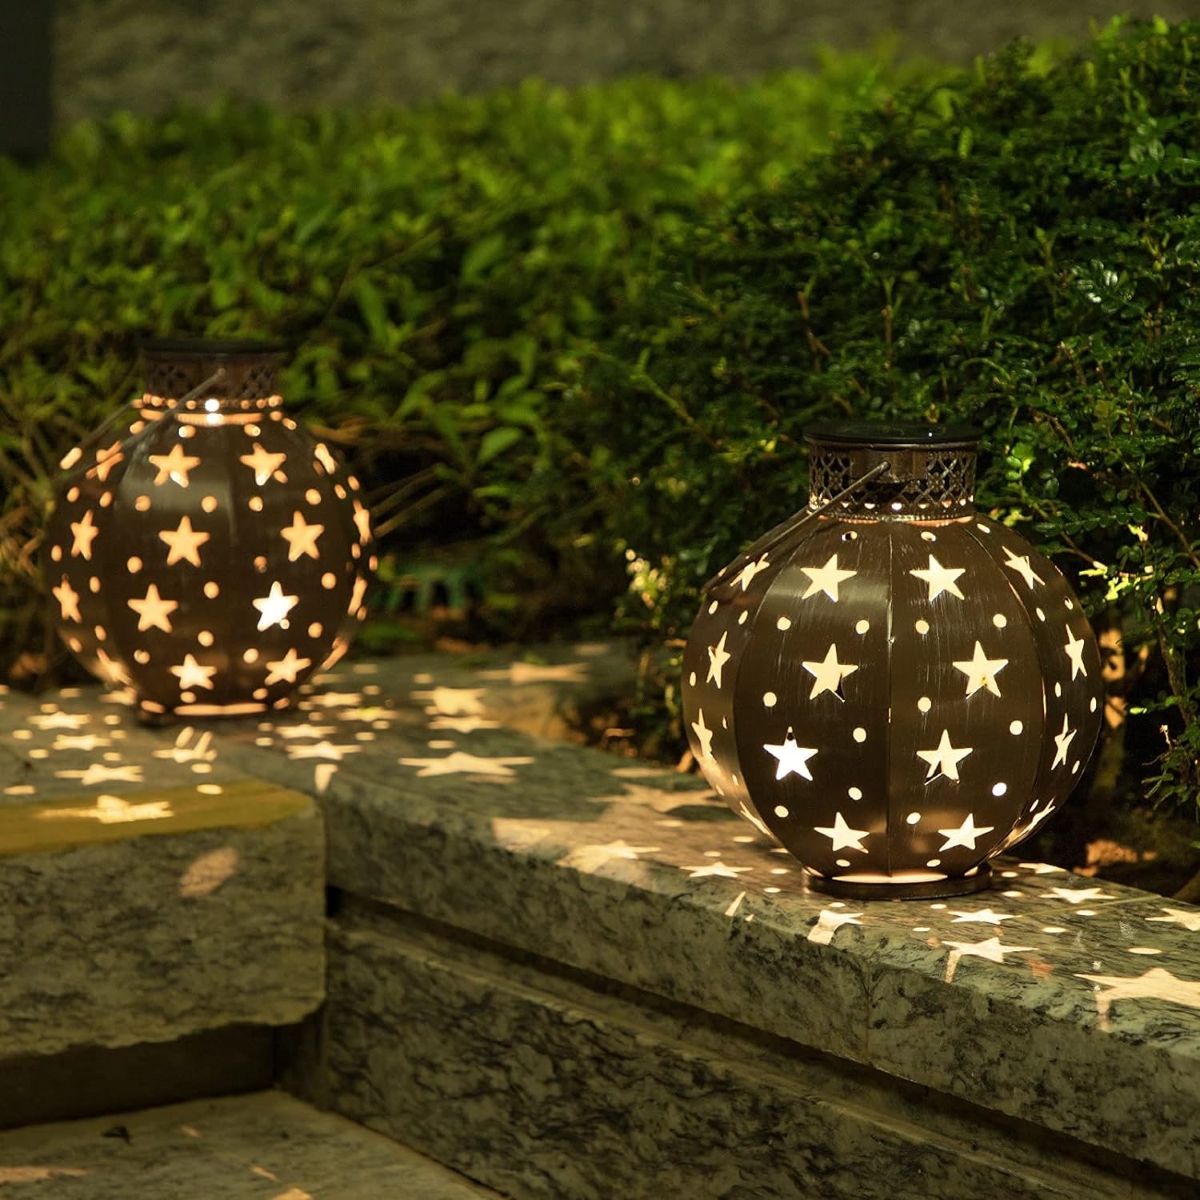 Backyard solar globe lights with star designs.